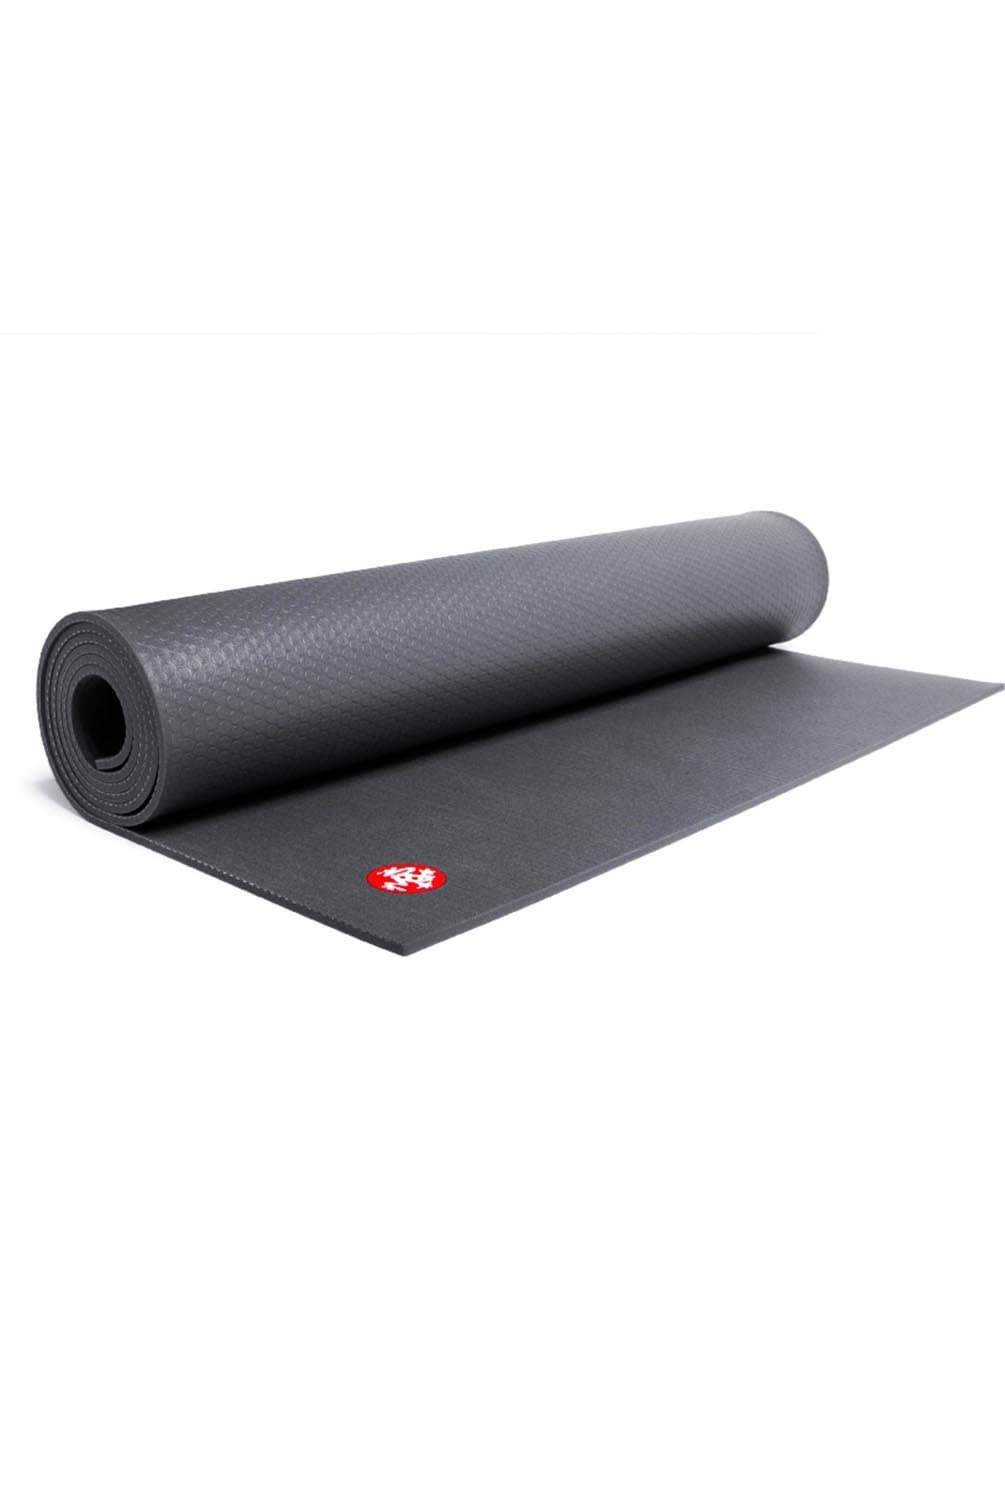 Yoga Gear: Manduka Black Mat Pro Review — YOGABYCANDACE